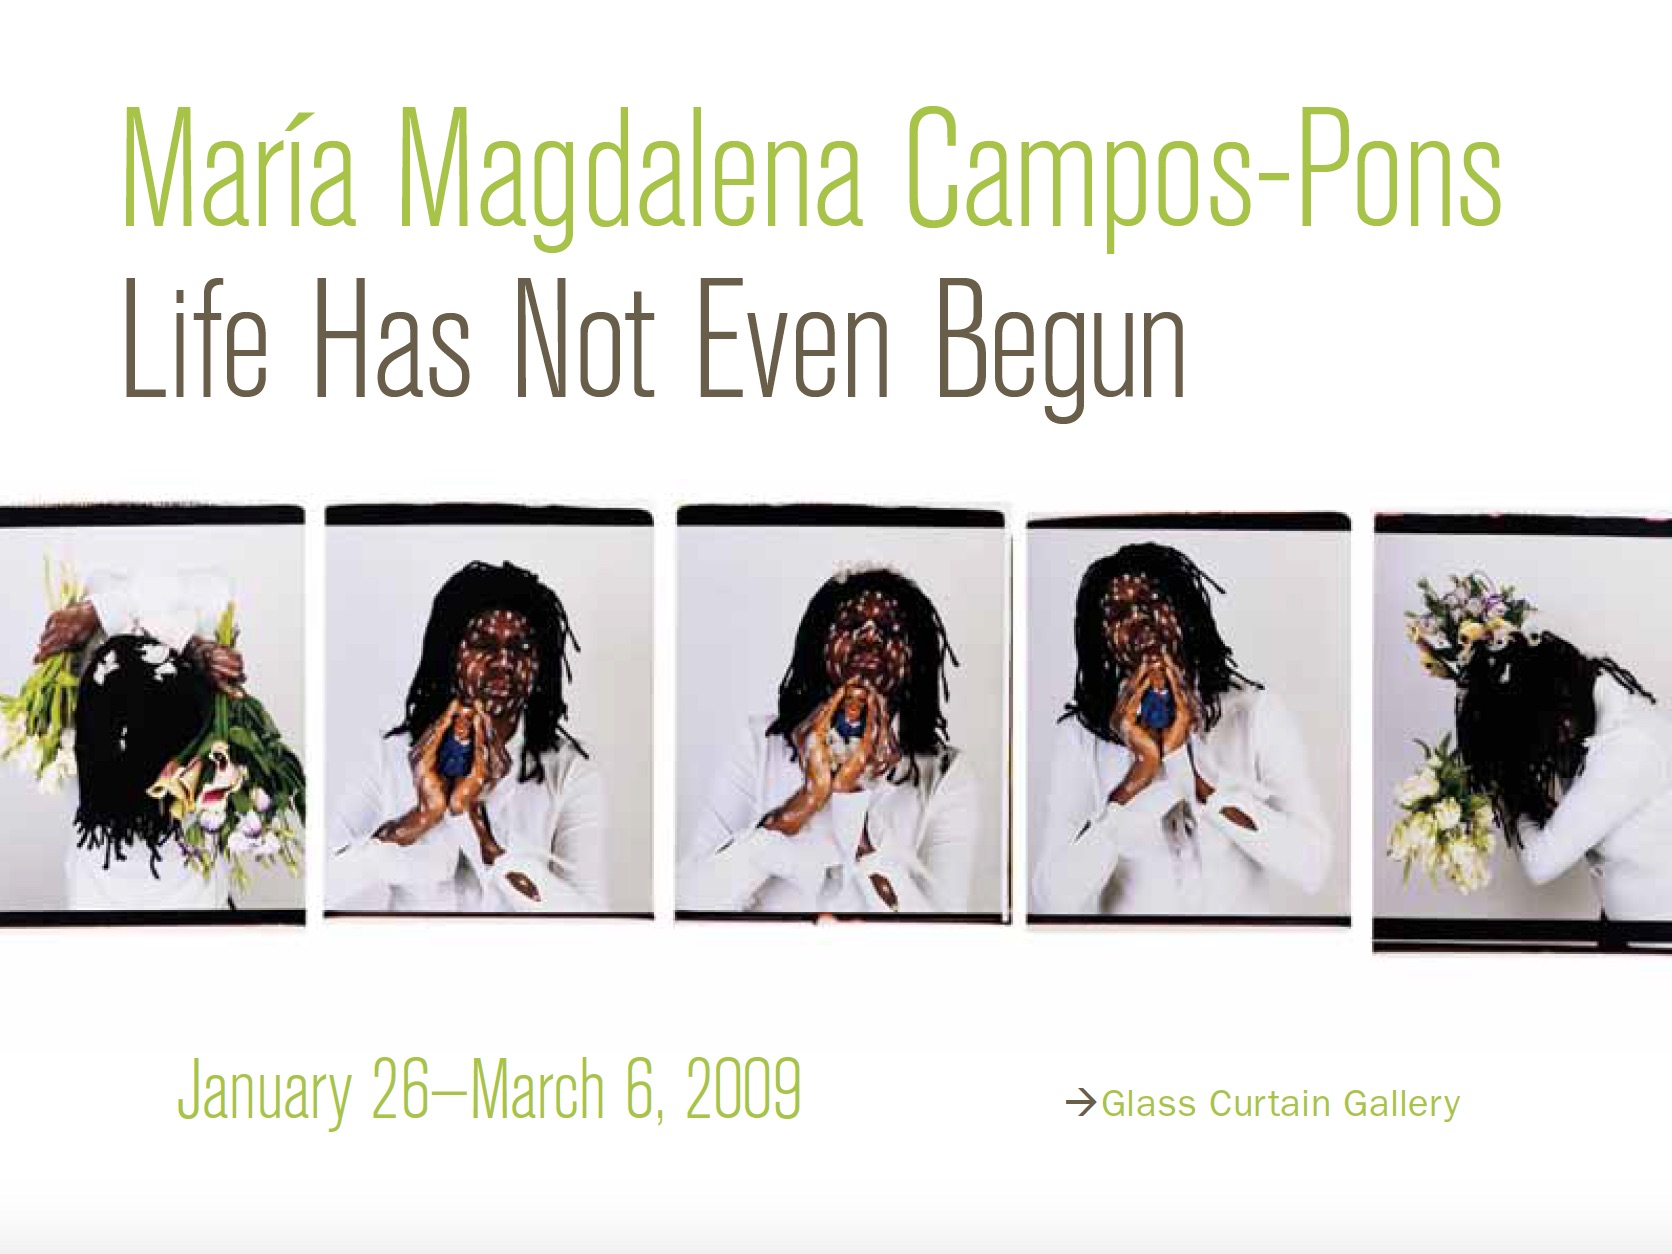    Maria Magdalena Campos-Pons: Life Has Not Even Begun   